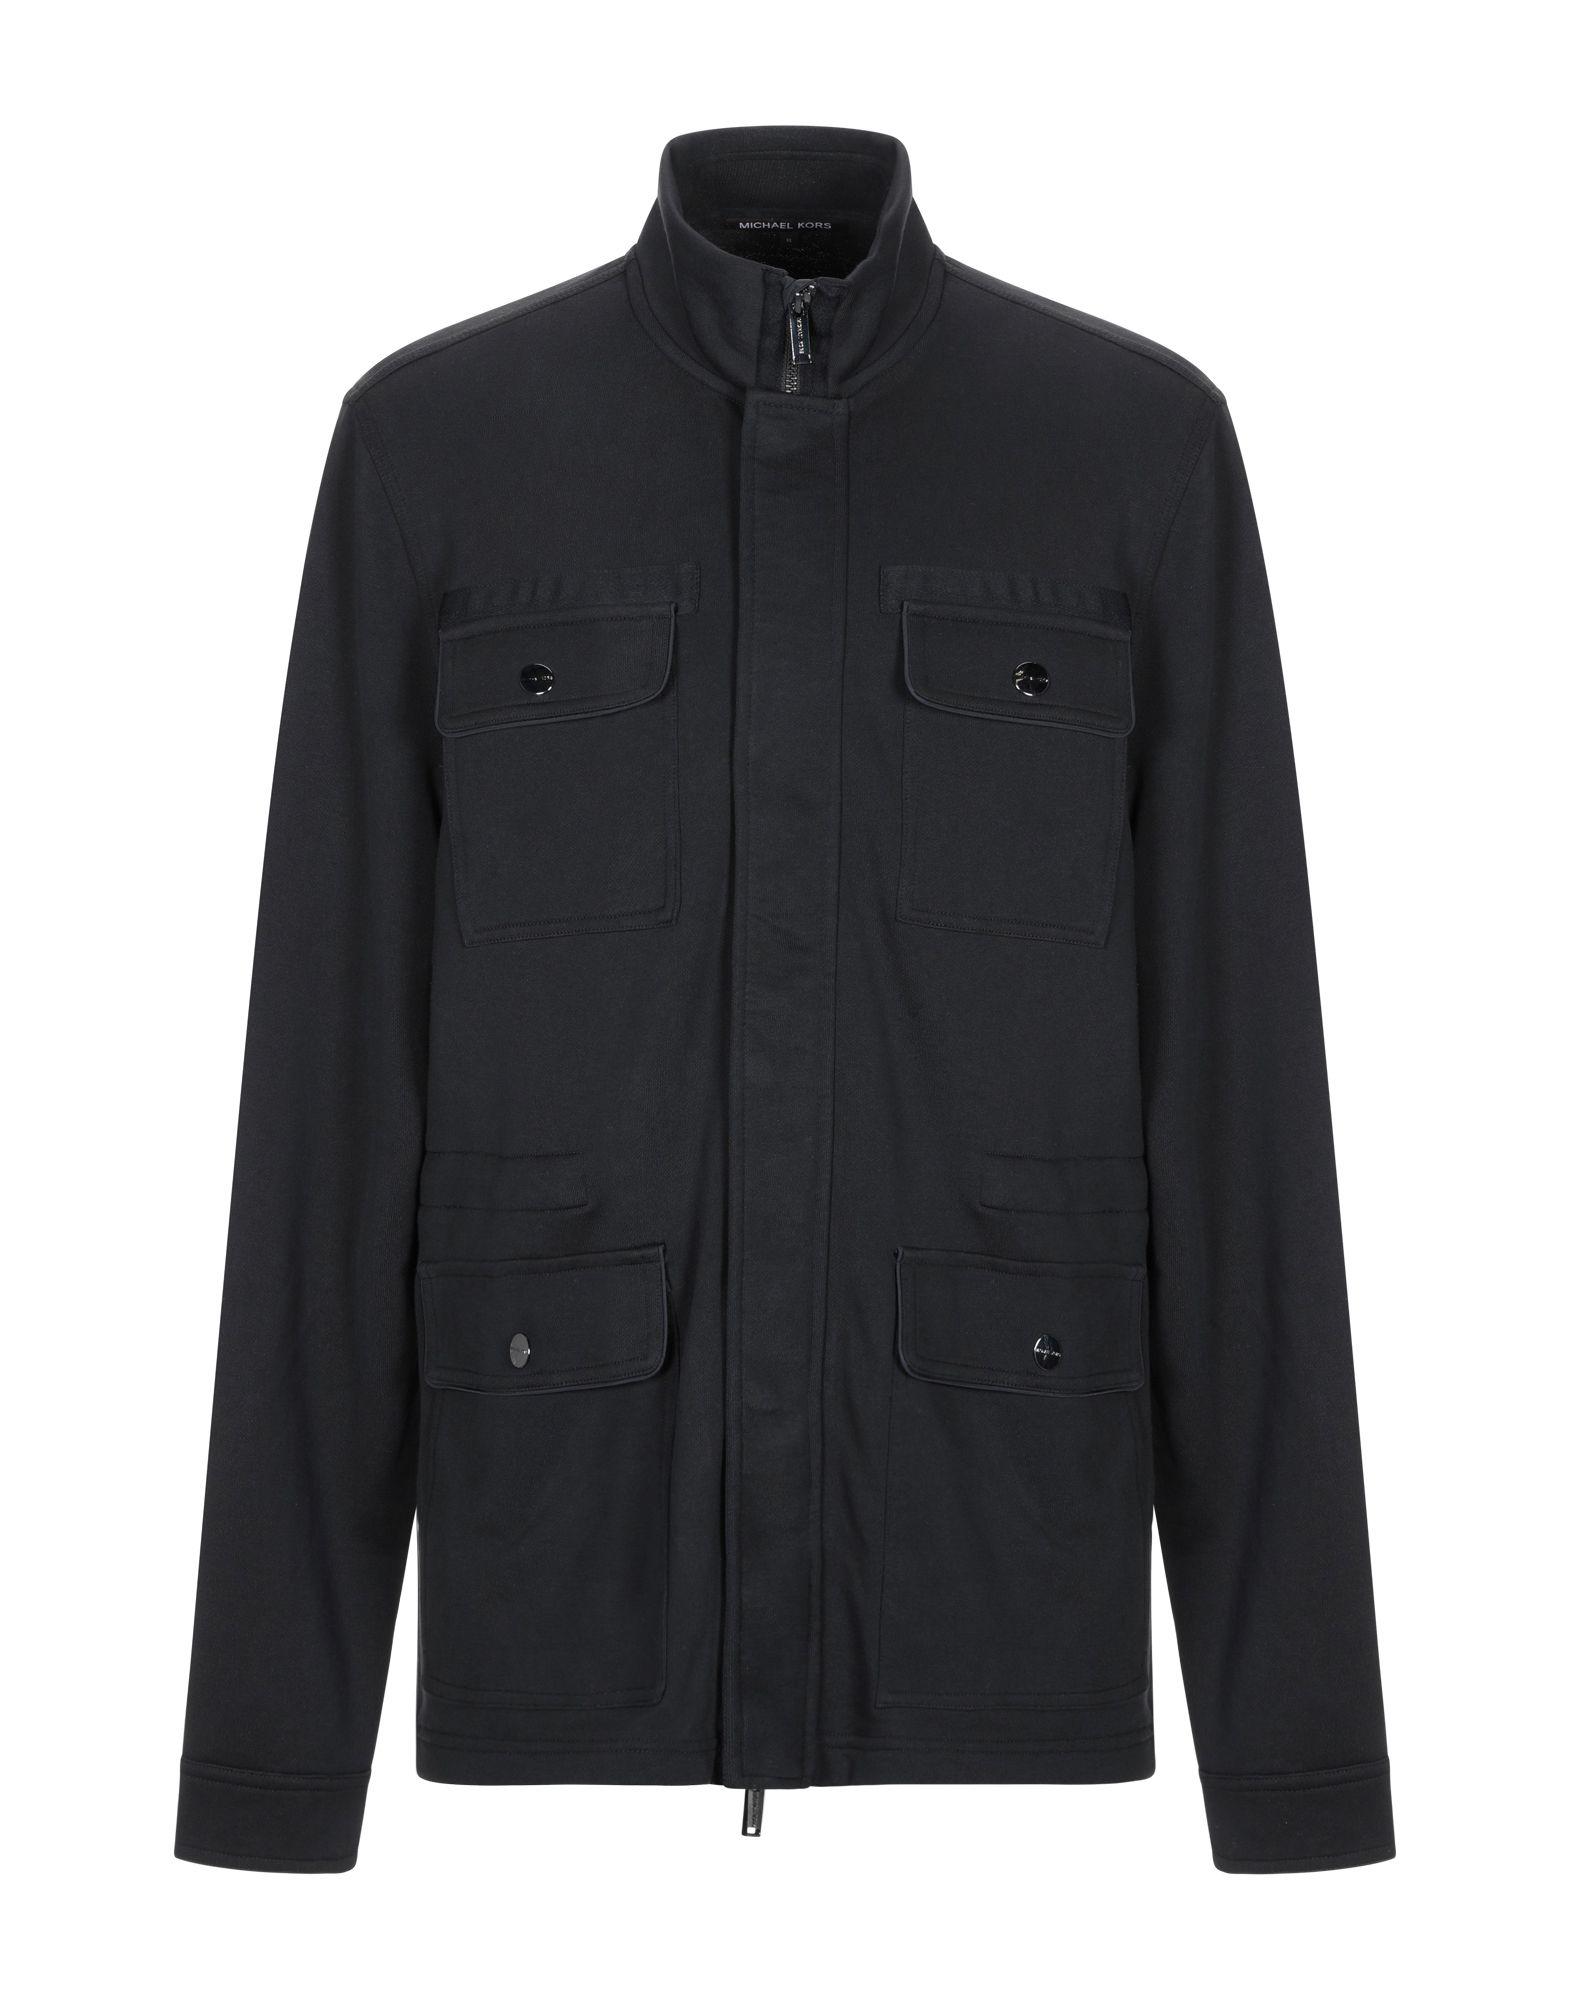 Michael Kors Fleece Jacket in Black for Men - Lyst